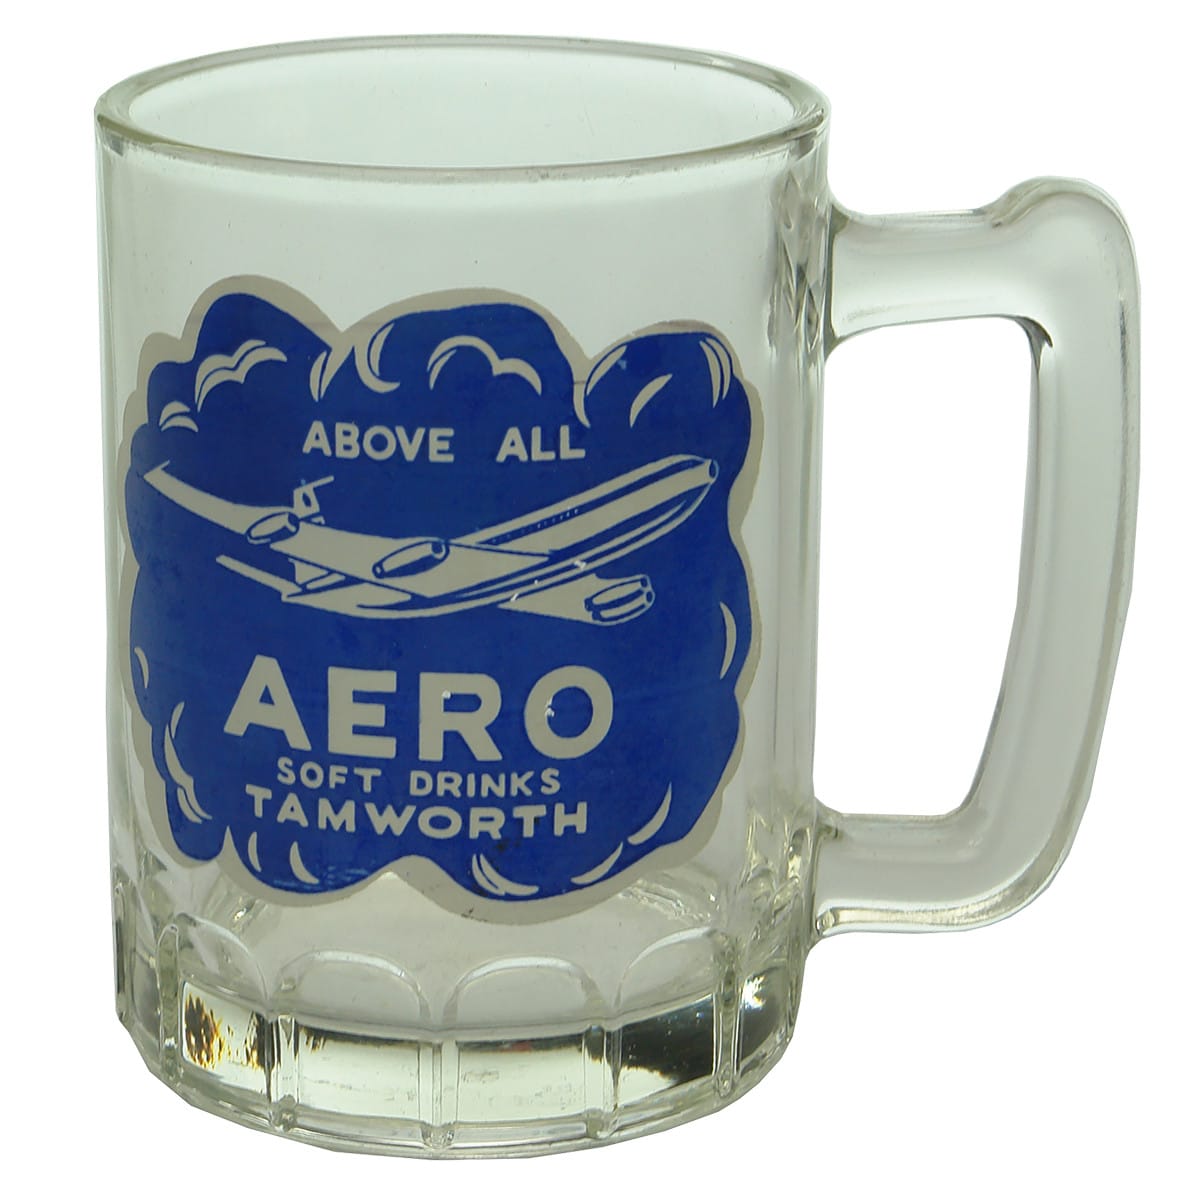 Drinking Glass/Mug. Ceramic label print for Aero Soft Drinks, Tamworth. (New South Wales)